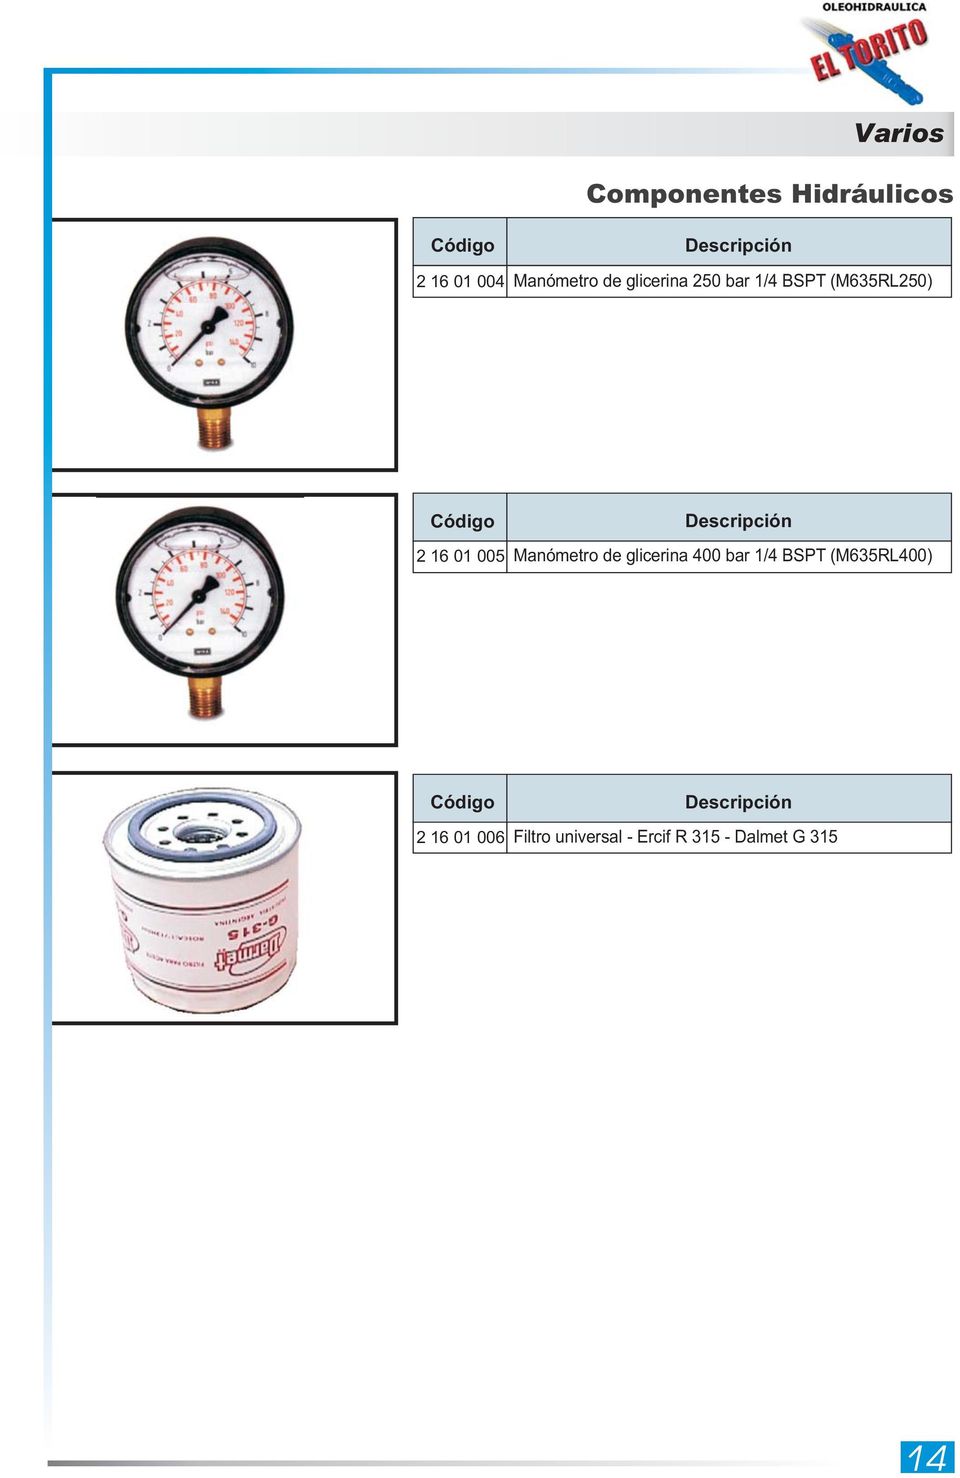 Manómetro de glicerina 400 bar 1/4 BSPT (M65RL400) 2